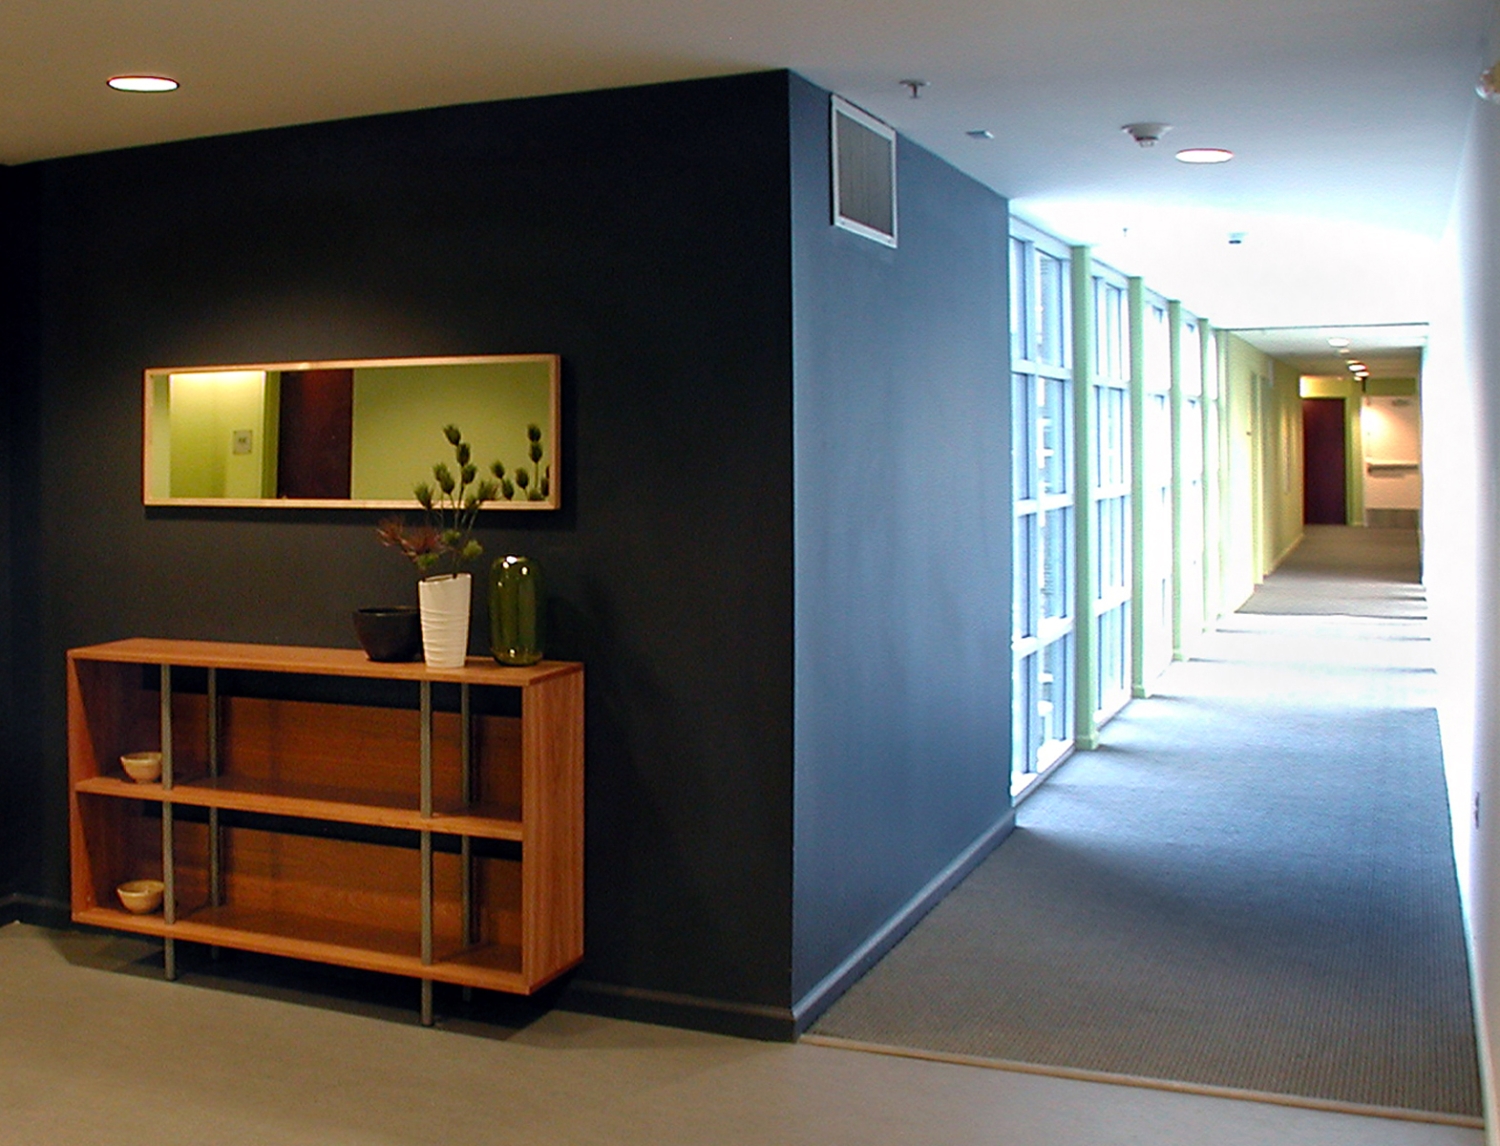 Residential hallway inside 8th & Howard/SOMA Studios in San Francisco, Ca.